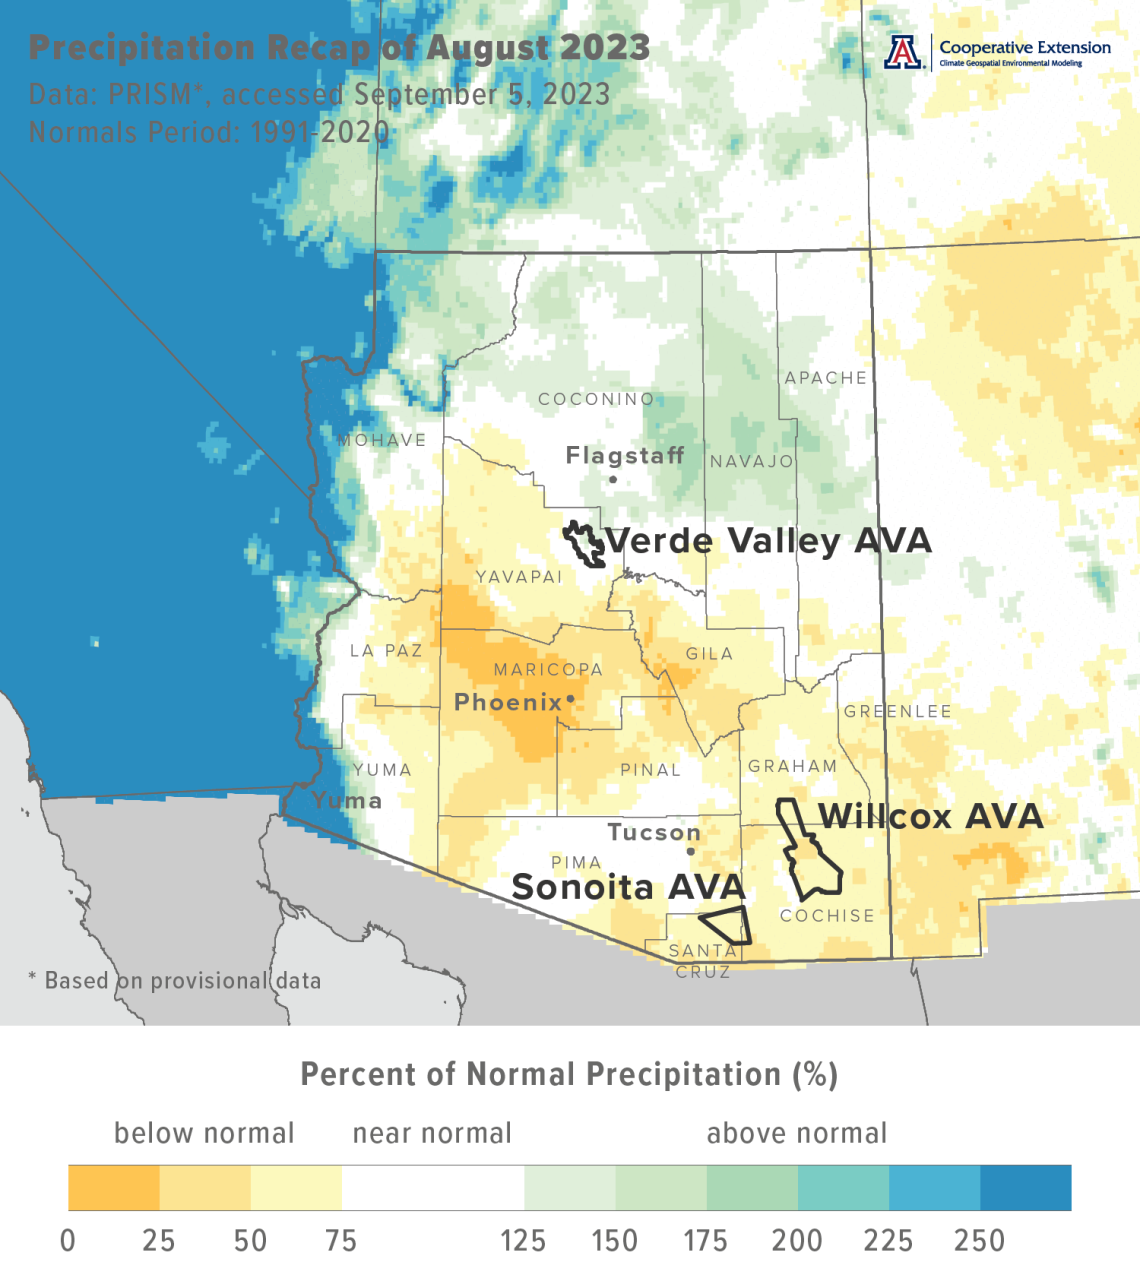 August 2023 precipitation map for Arizona